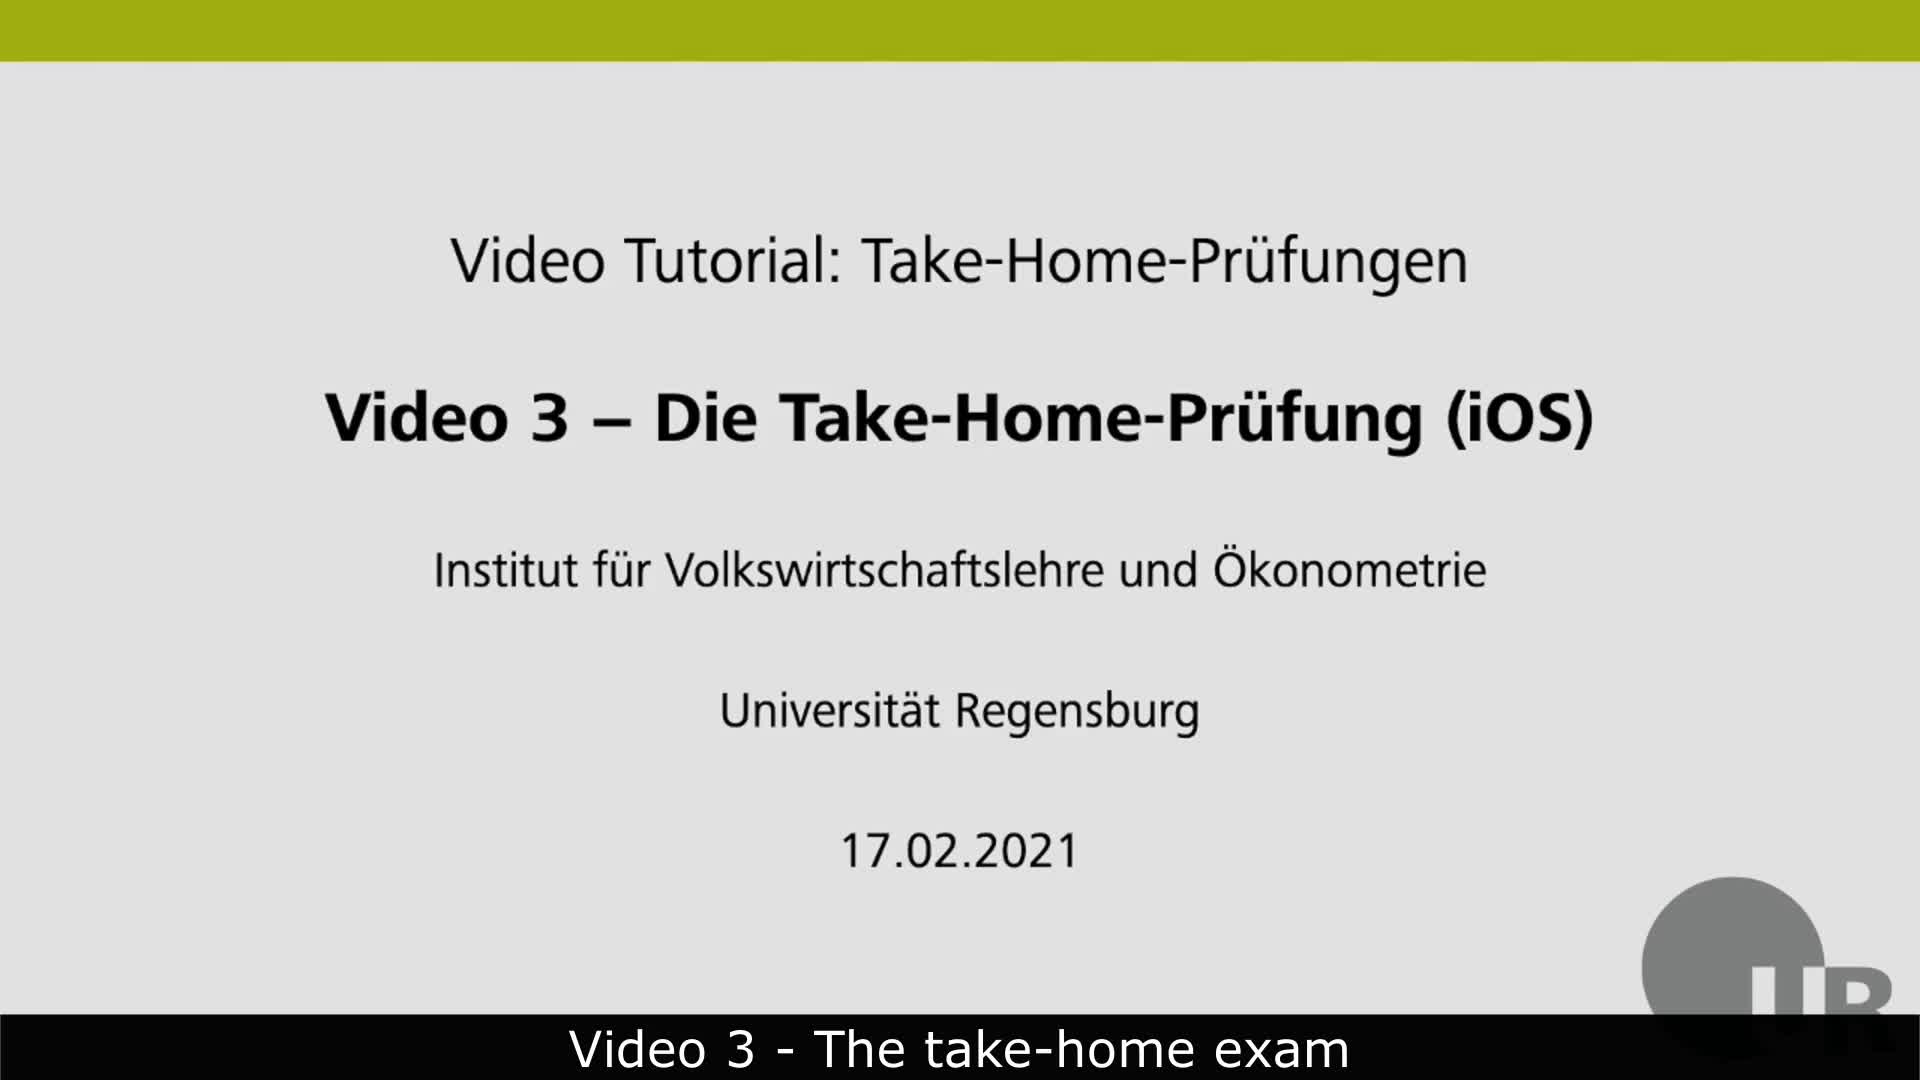 Video 3 - The Take-Home-Exam (iOS, English subtitles)